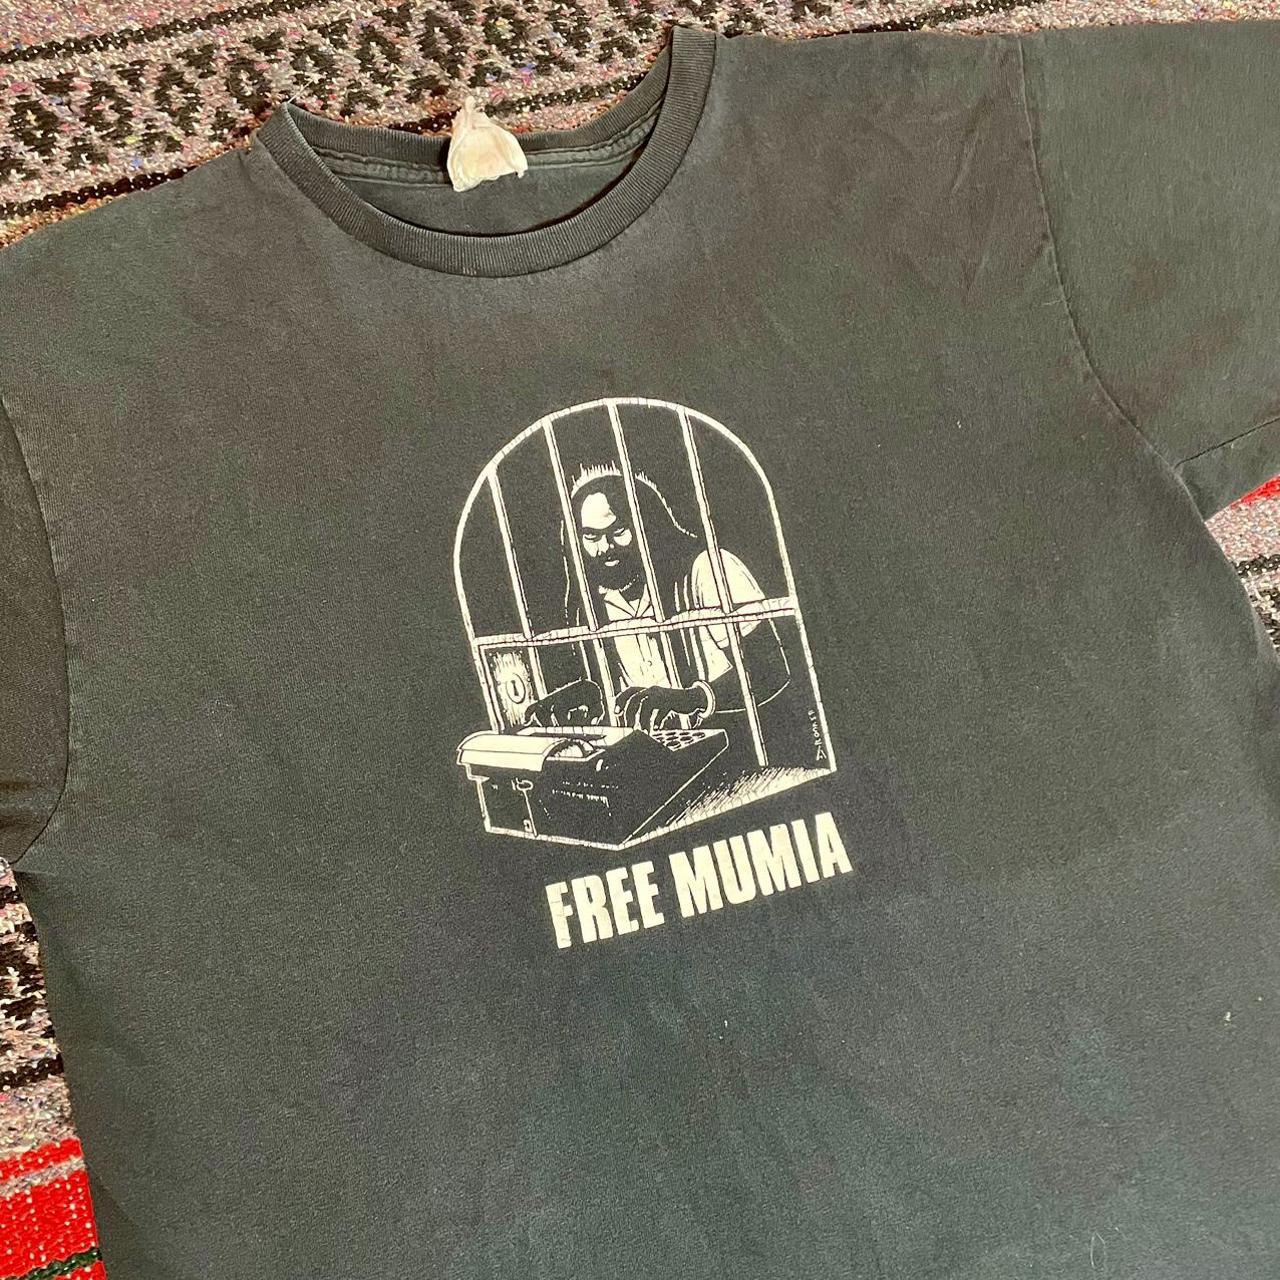 Rage against the machine free mumia concert t shirt...